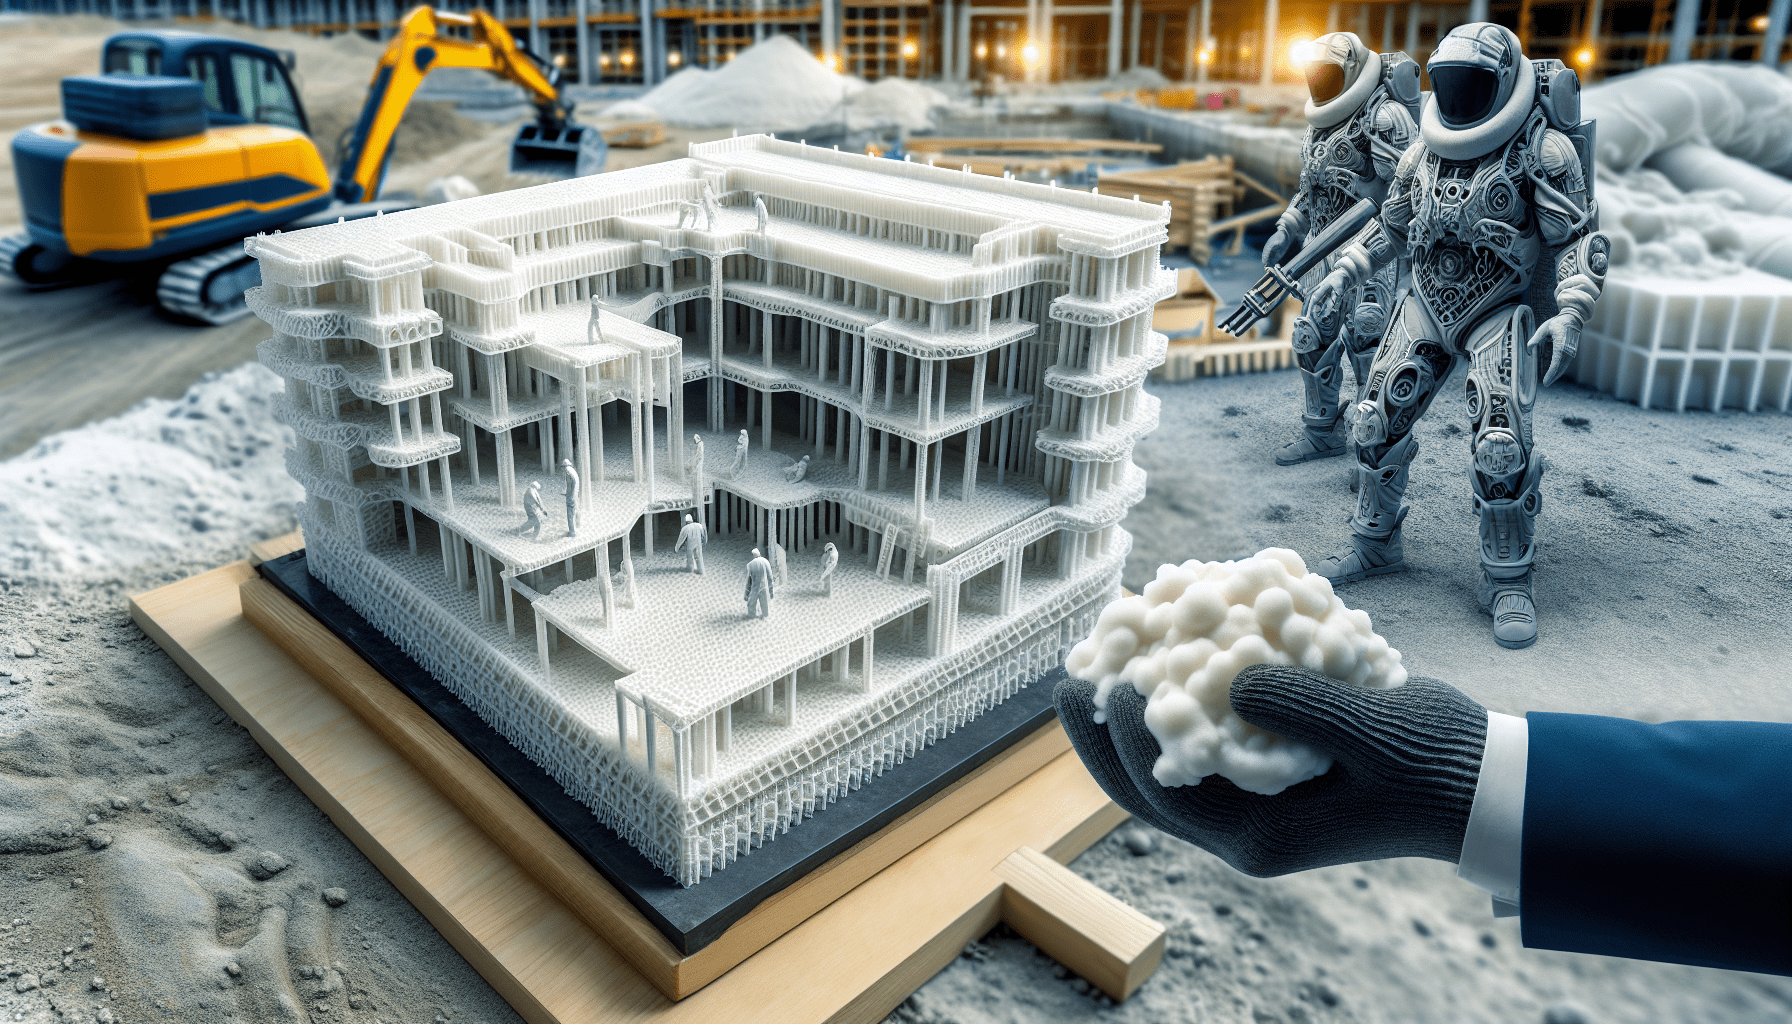 eth-zurichs-foamwork-system-reducing-concrete-use-in-buildings-through-3d-printed-foam-formwork ETH Zurich's FoamWork System: Reducing Concrete Use in Buildings Through 3D-Printed Foam Formwork